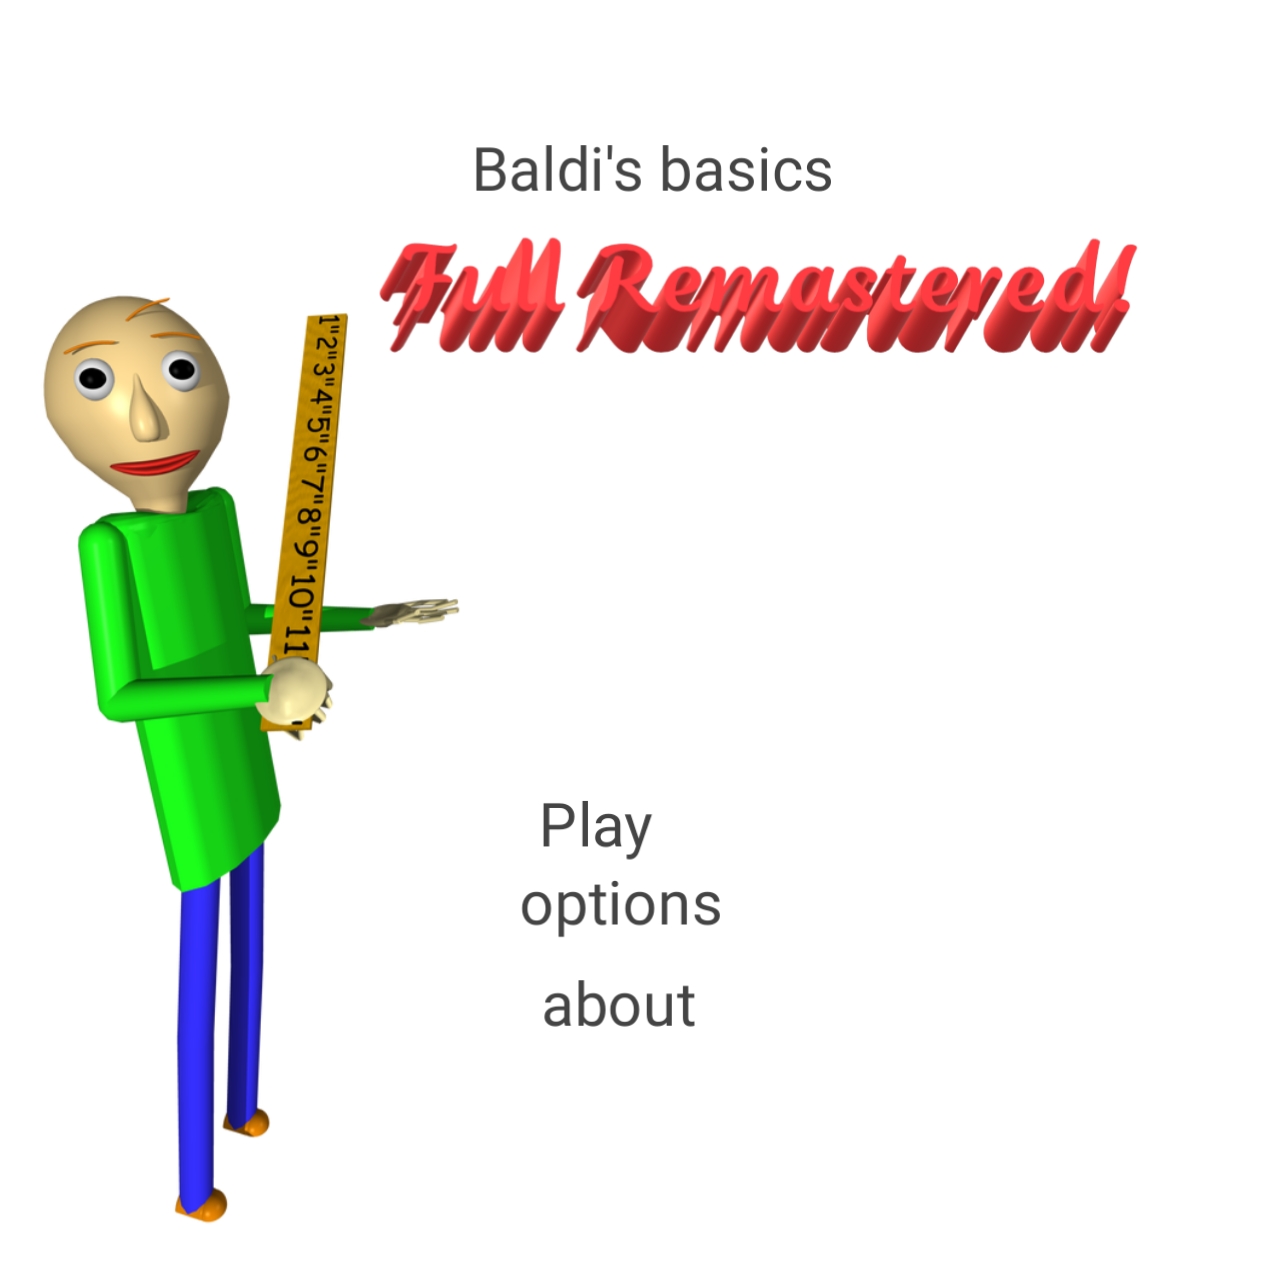 Mario plays baldi's basics